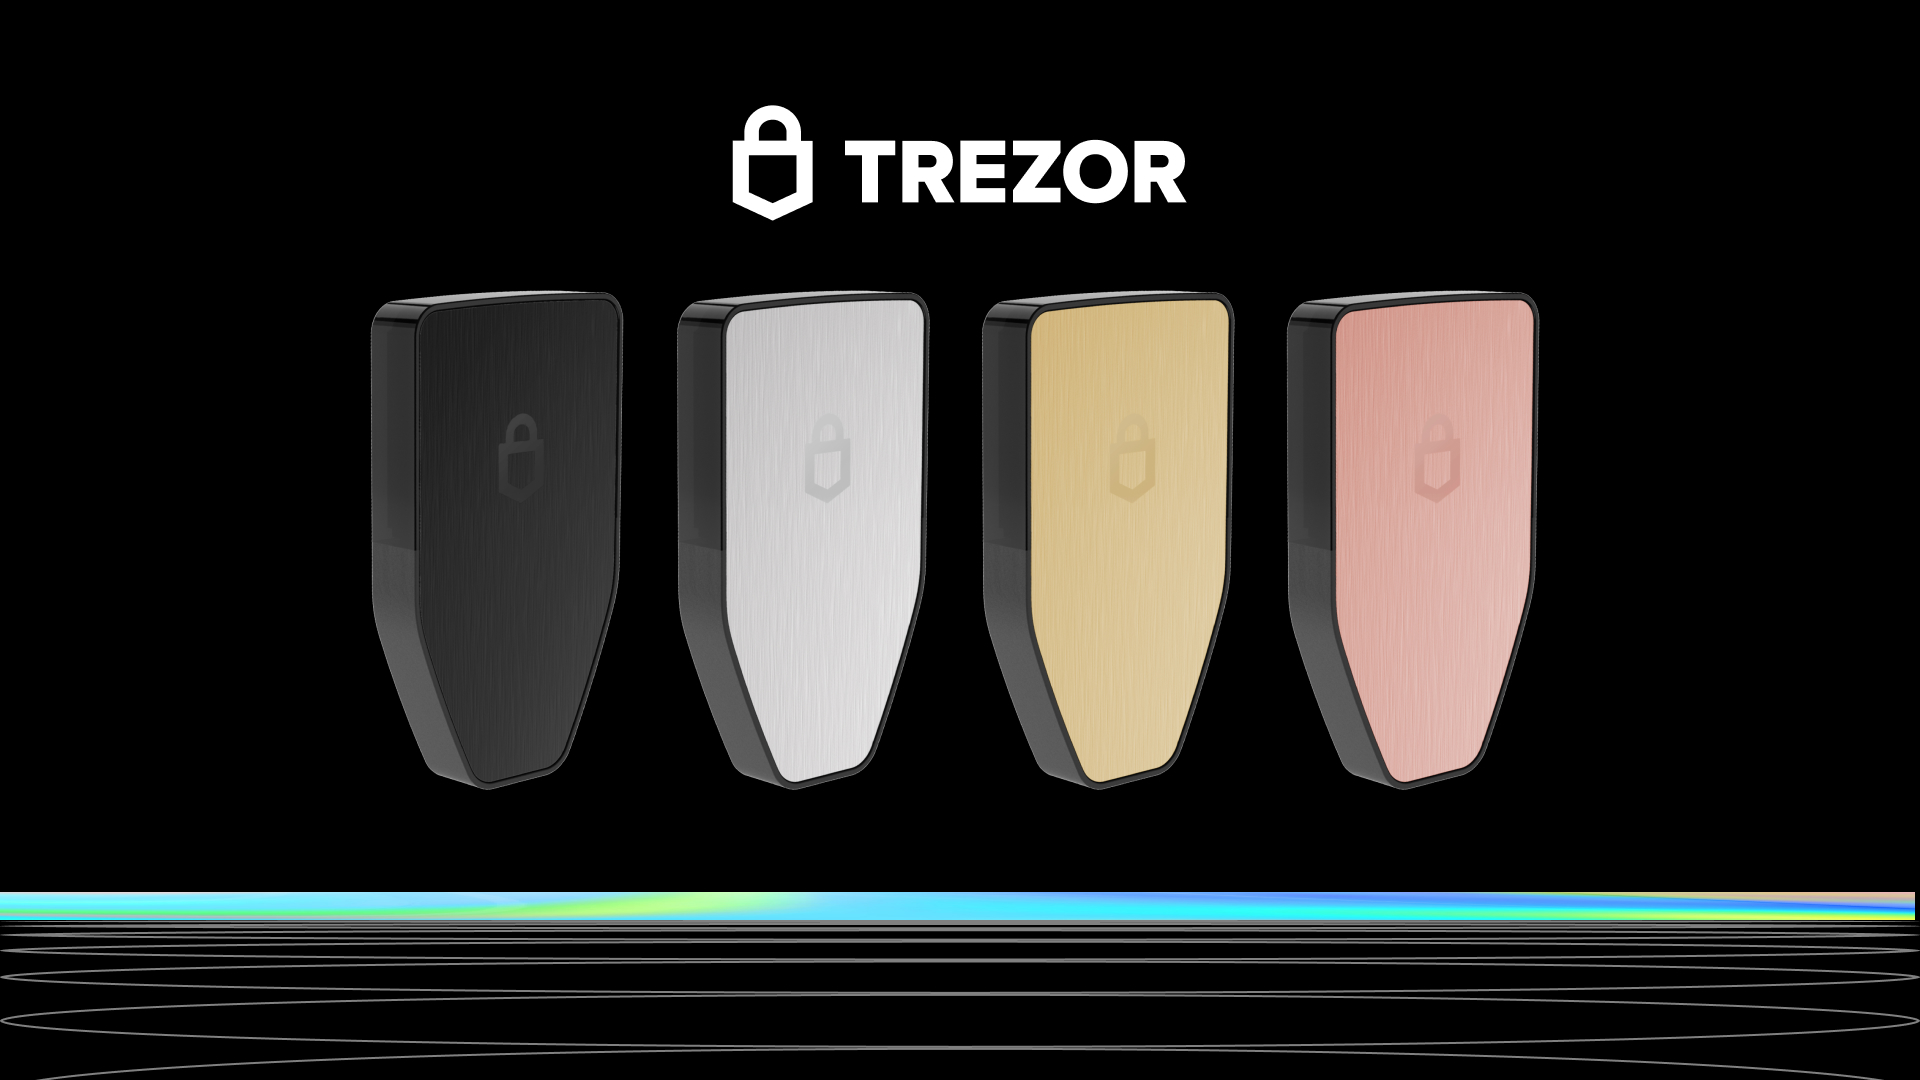 Trezor's innovative solutions